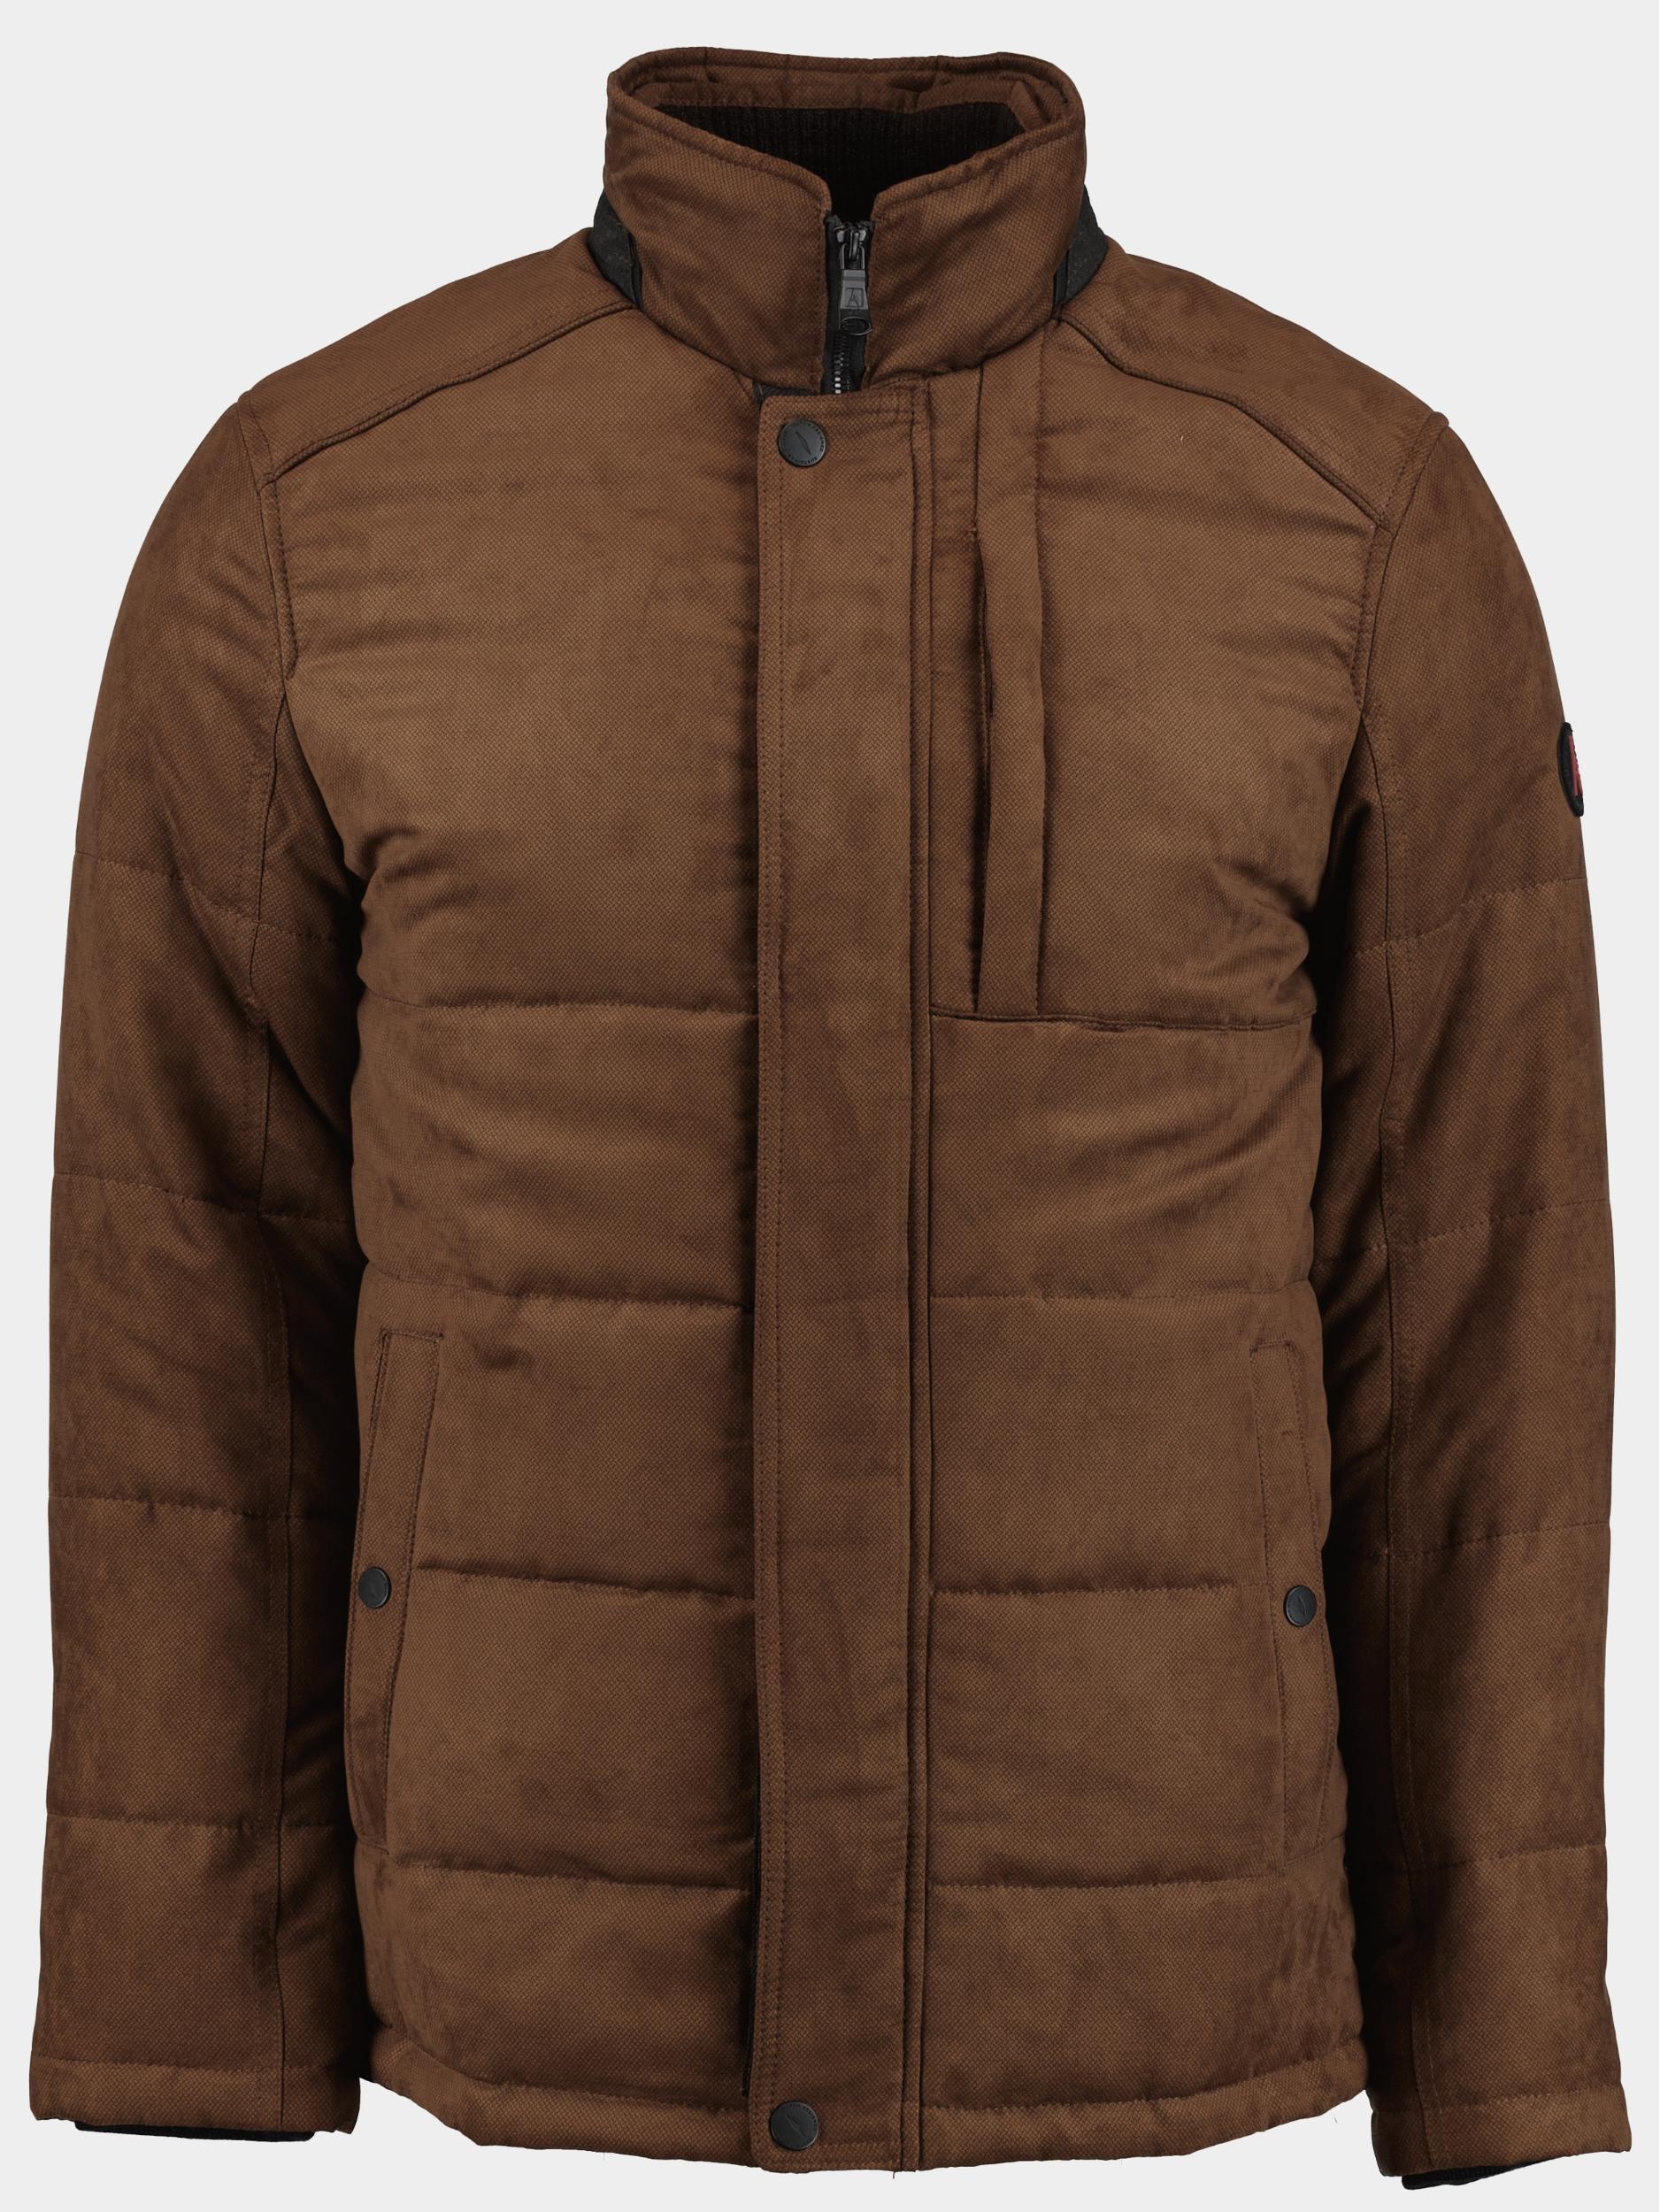 Donders 1860 Winterjack Bruin Textile Jacket 21752/460